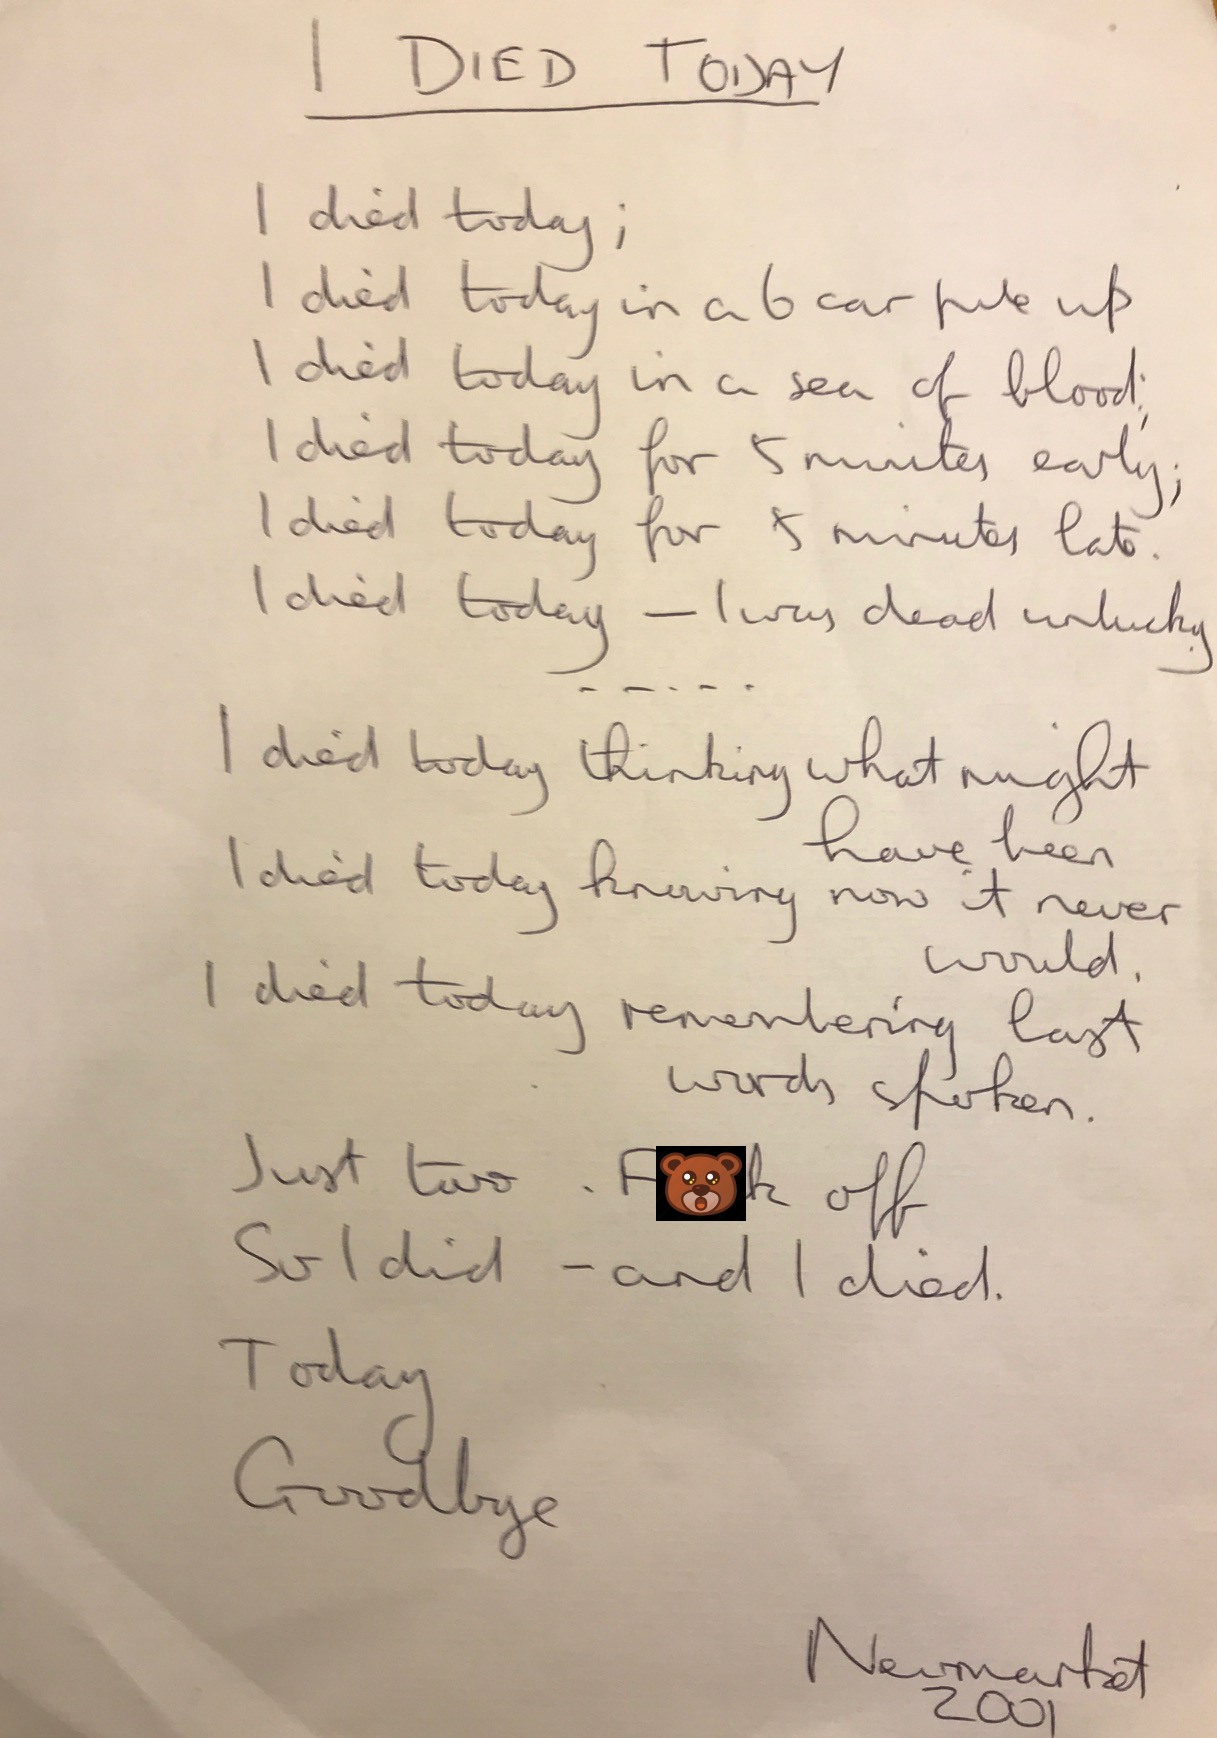 I Died Today: The original handwritten poem (slightly edited...)